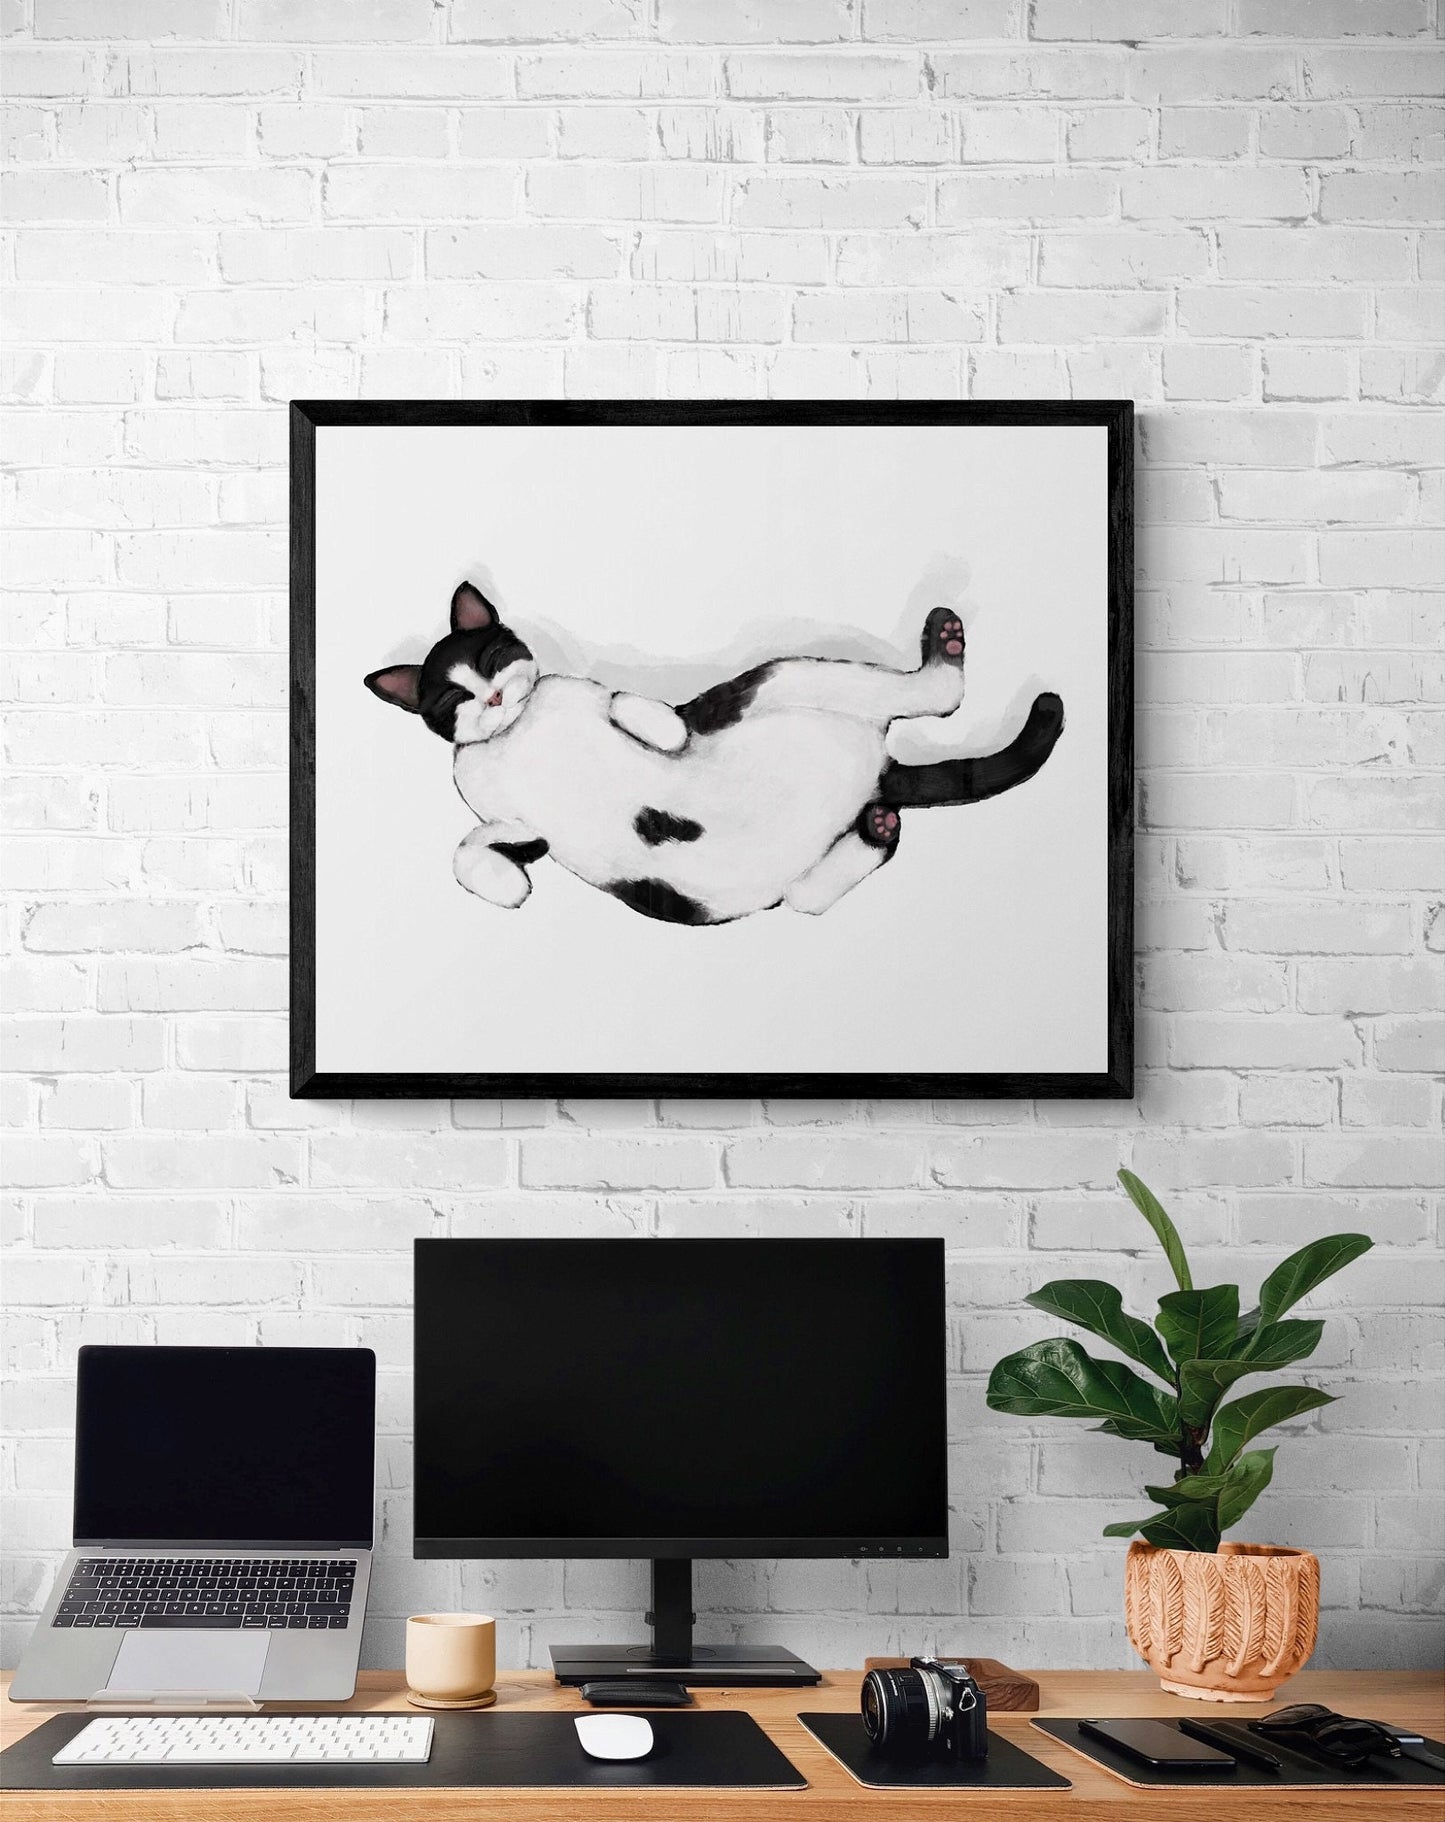 Sleeping Black and White Cat Print, Sleeping Cat Artwork, Sleeping Tuxedo Cat Art, Cat Illustration, Home Decor, Cat Painting, Cat Lover